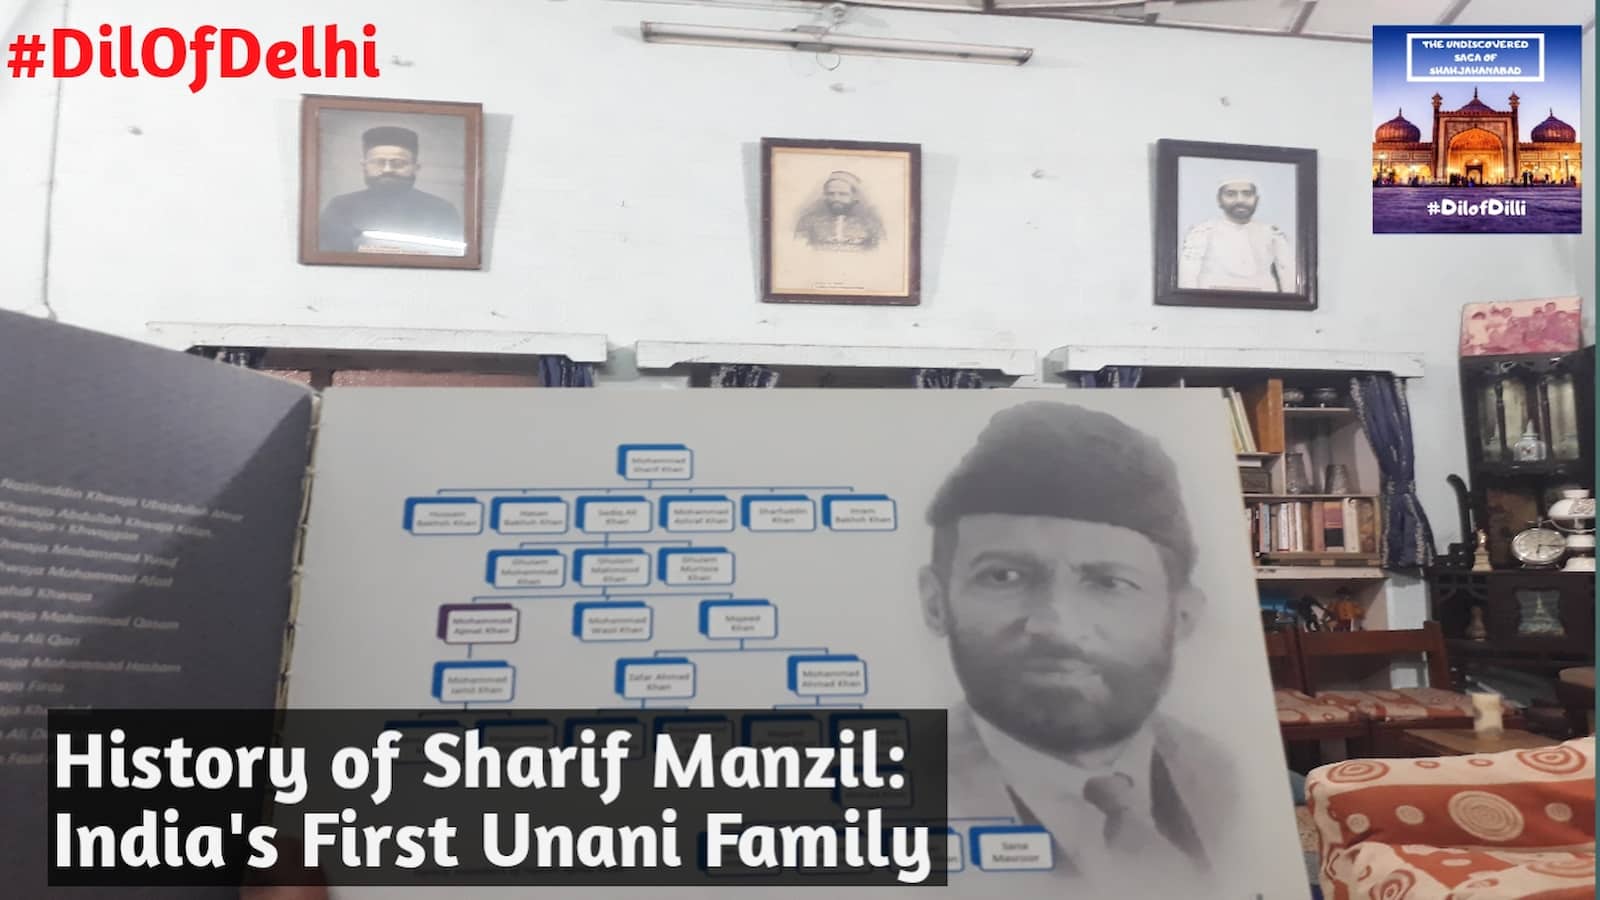 Sharif Manzil, India's First Unani Family